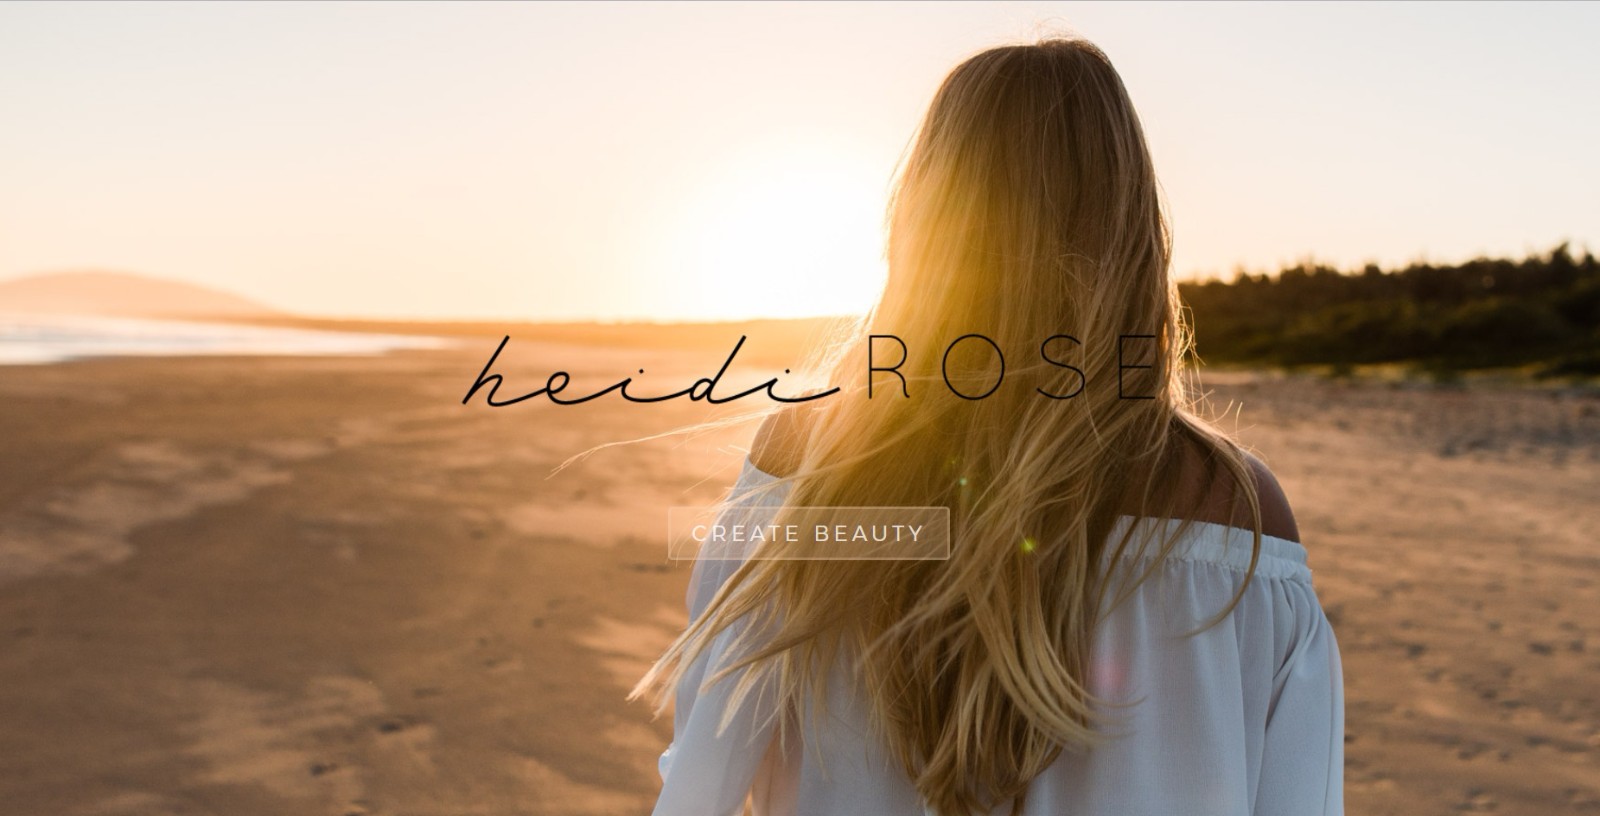 Heidi Rose